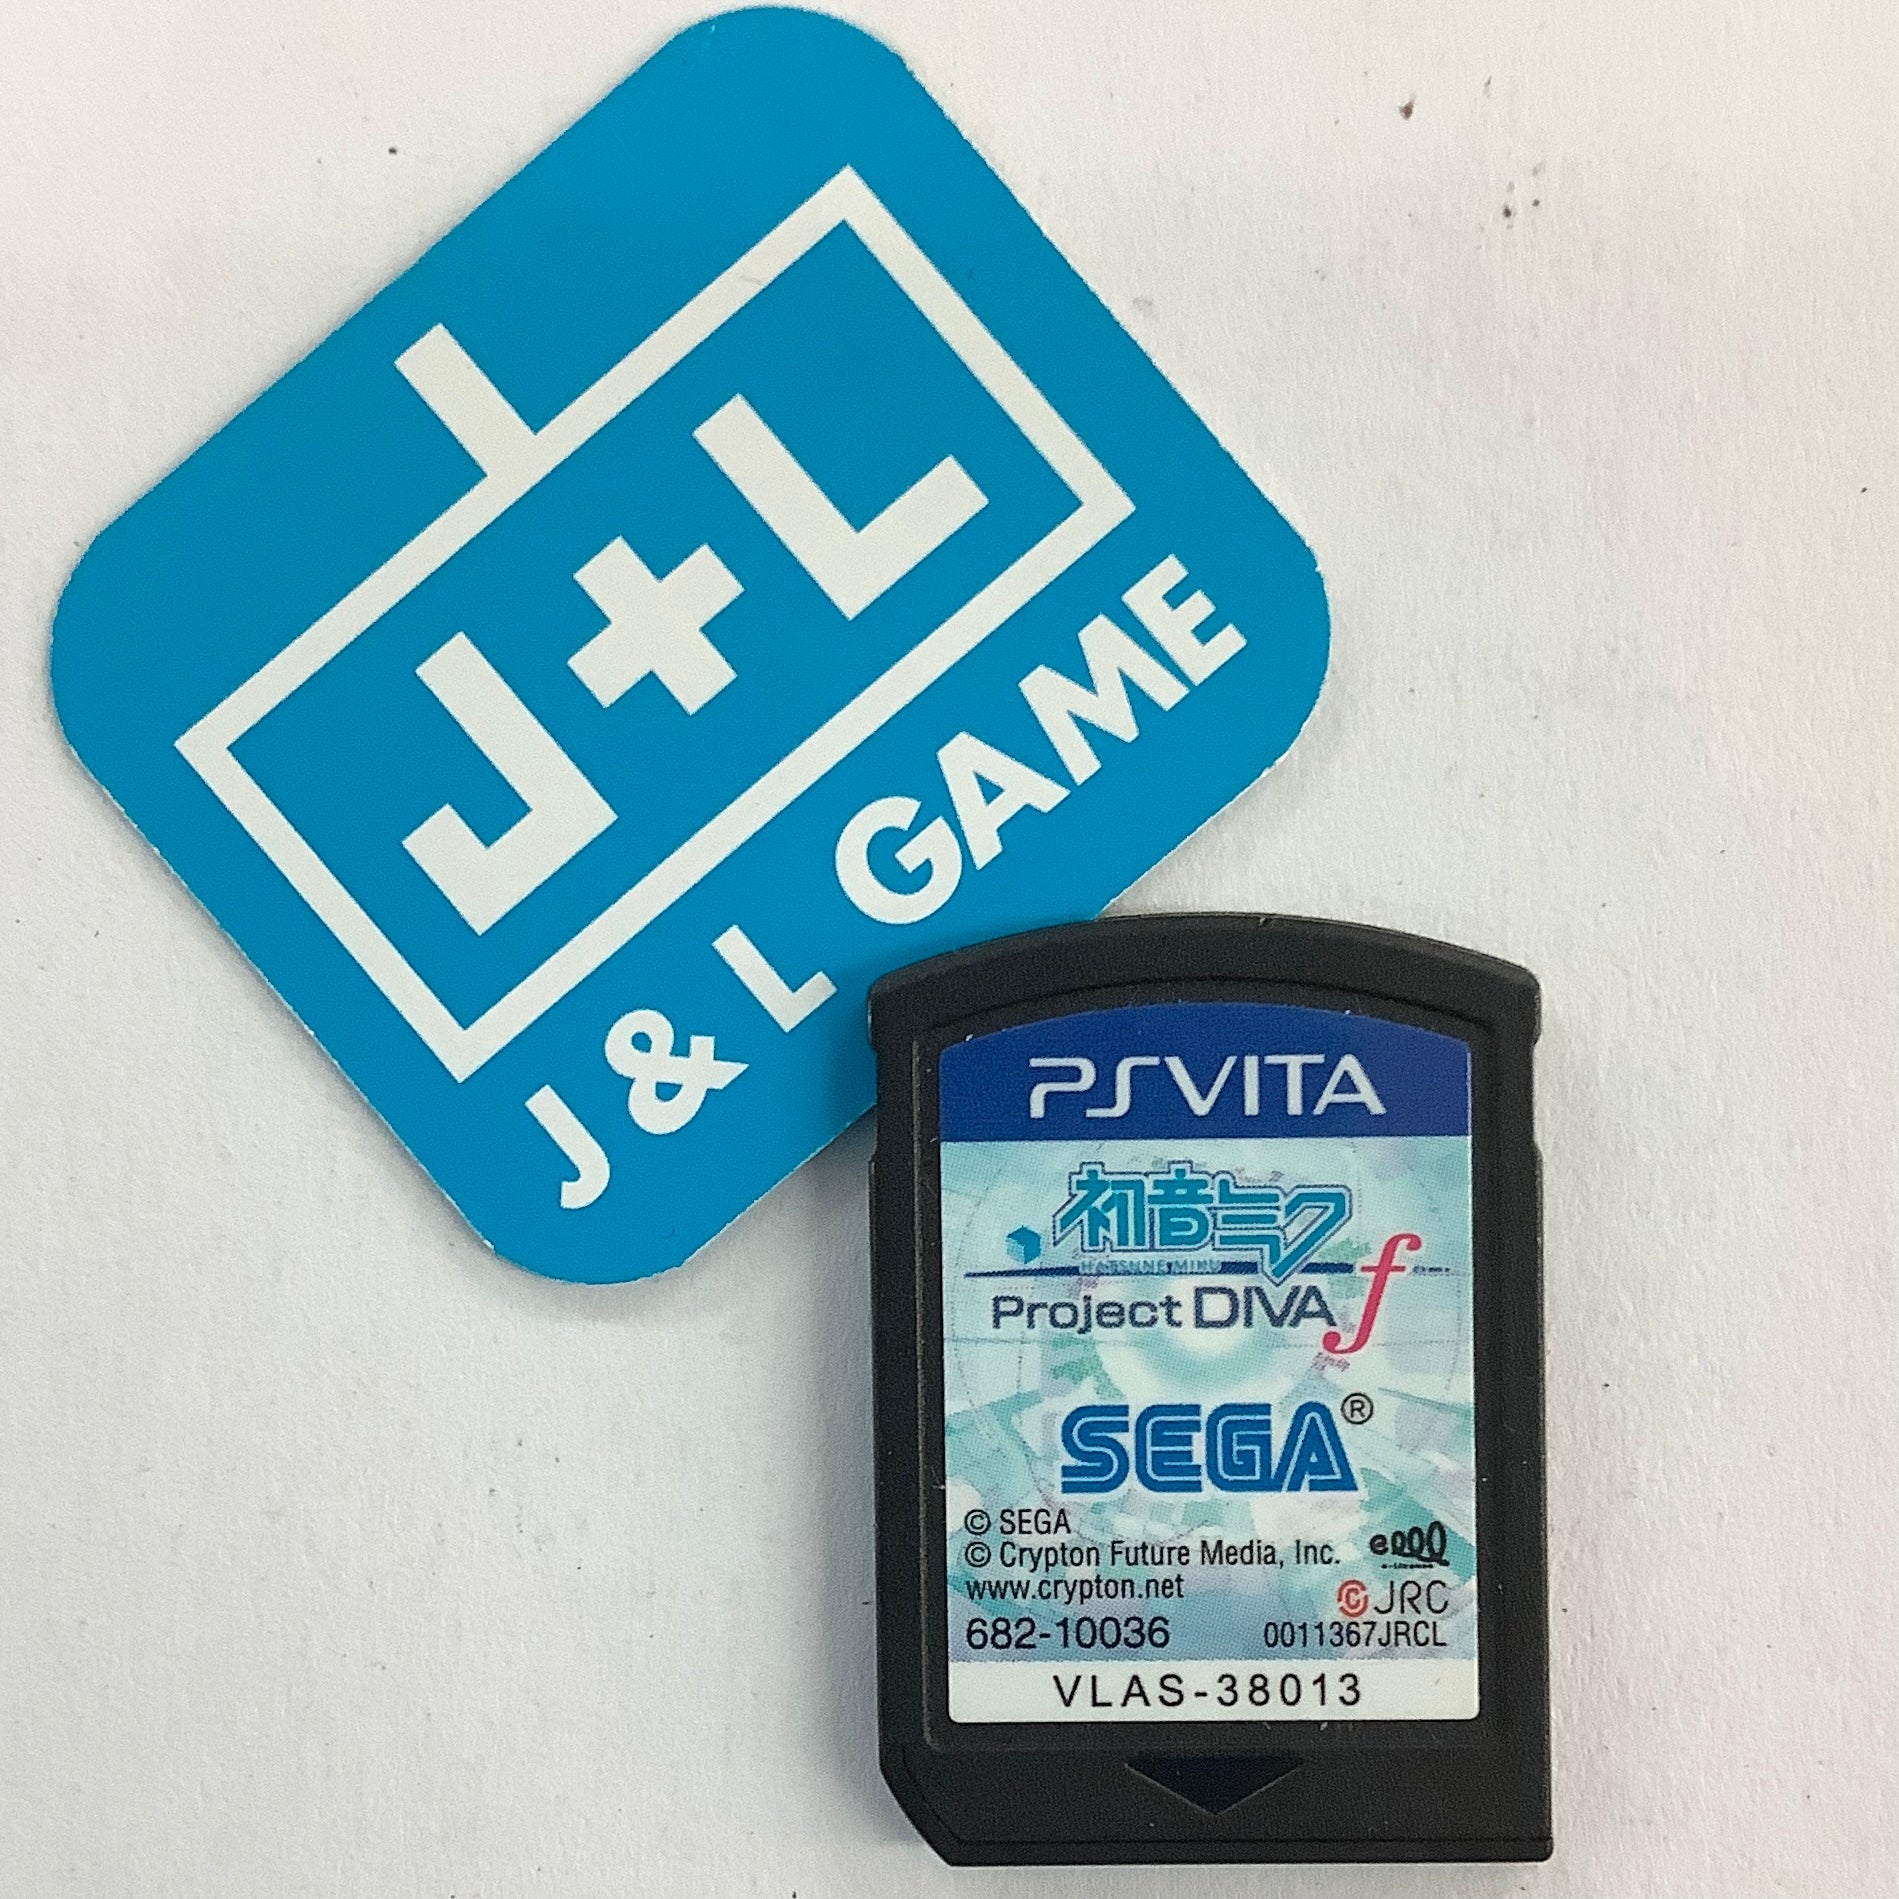 Hatsune Miku: Project Diva f (Japenese Sub) - (PSV) PlayStation Vita [Pre-Owned] (Asia Import) Video Games Sega   